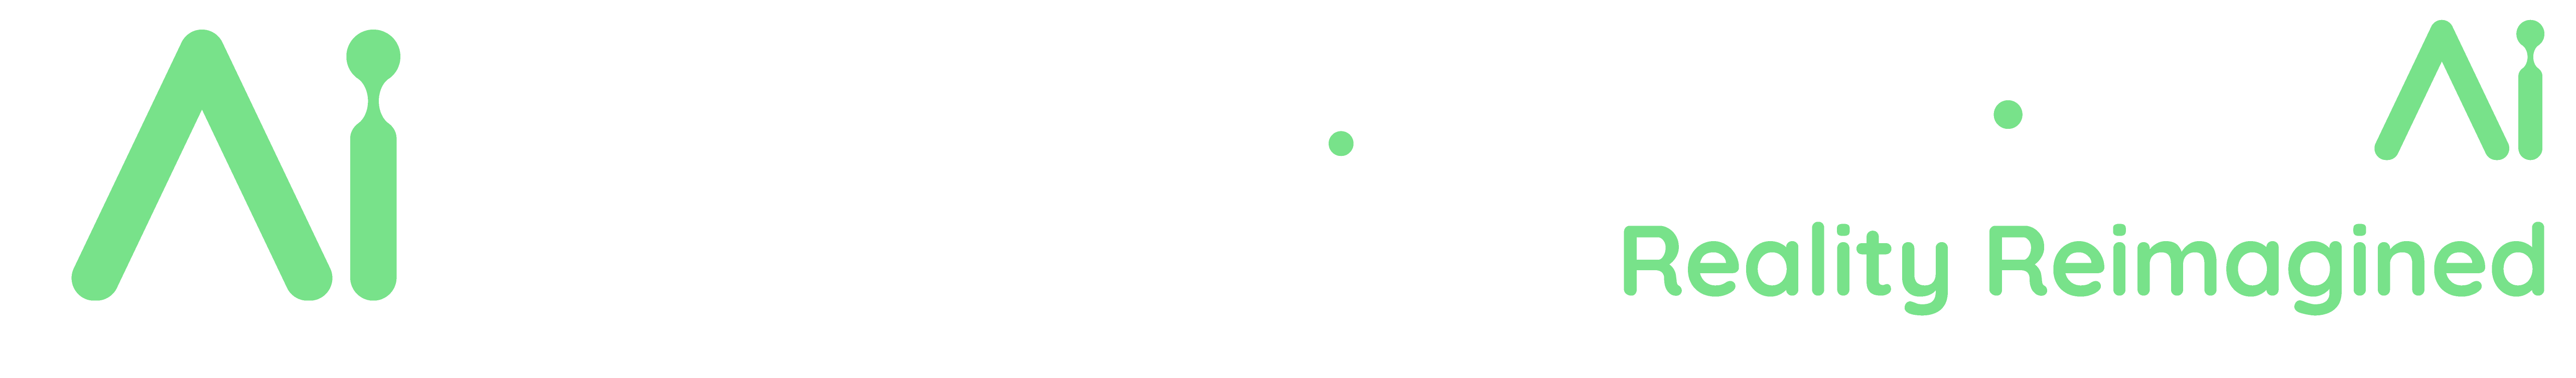 AiDay-2023-logo